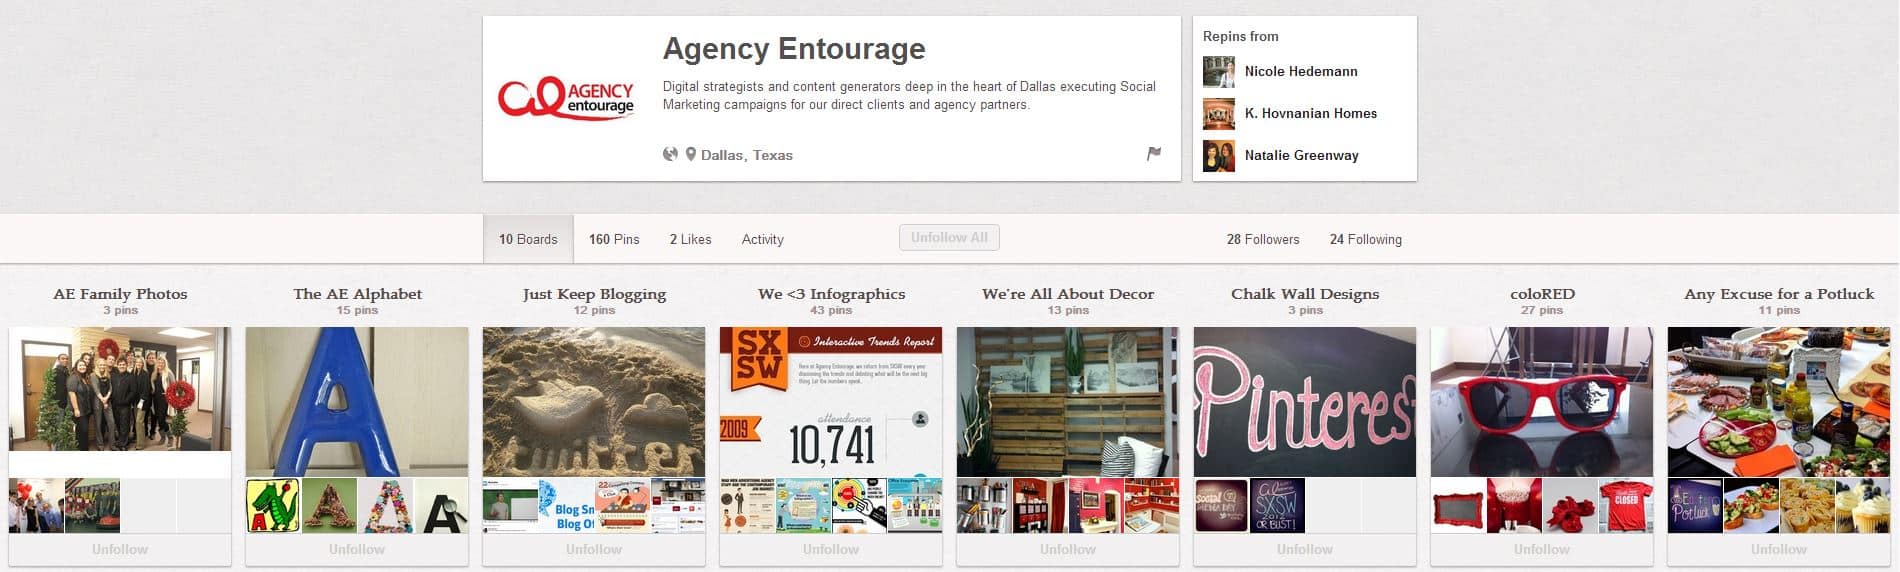 Agency Entourage Guide to Photo Social Media